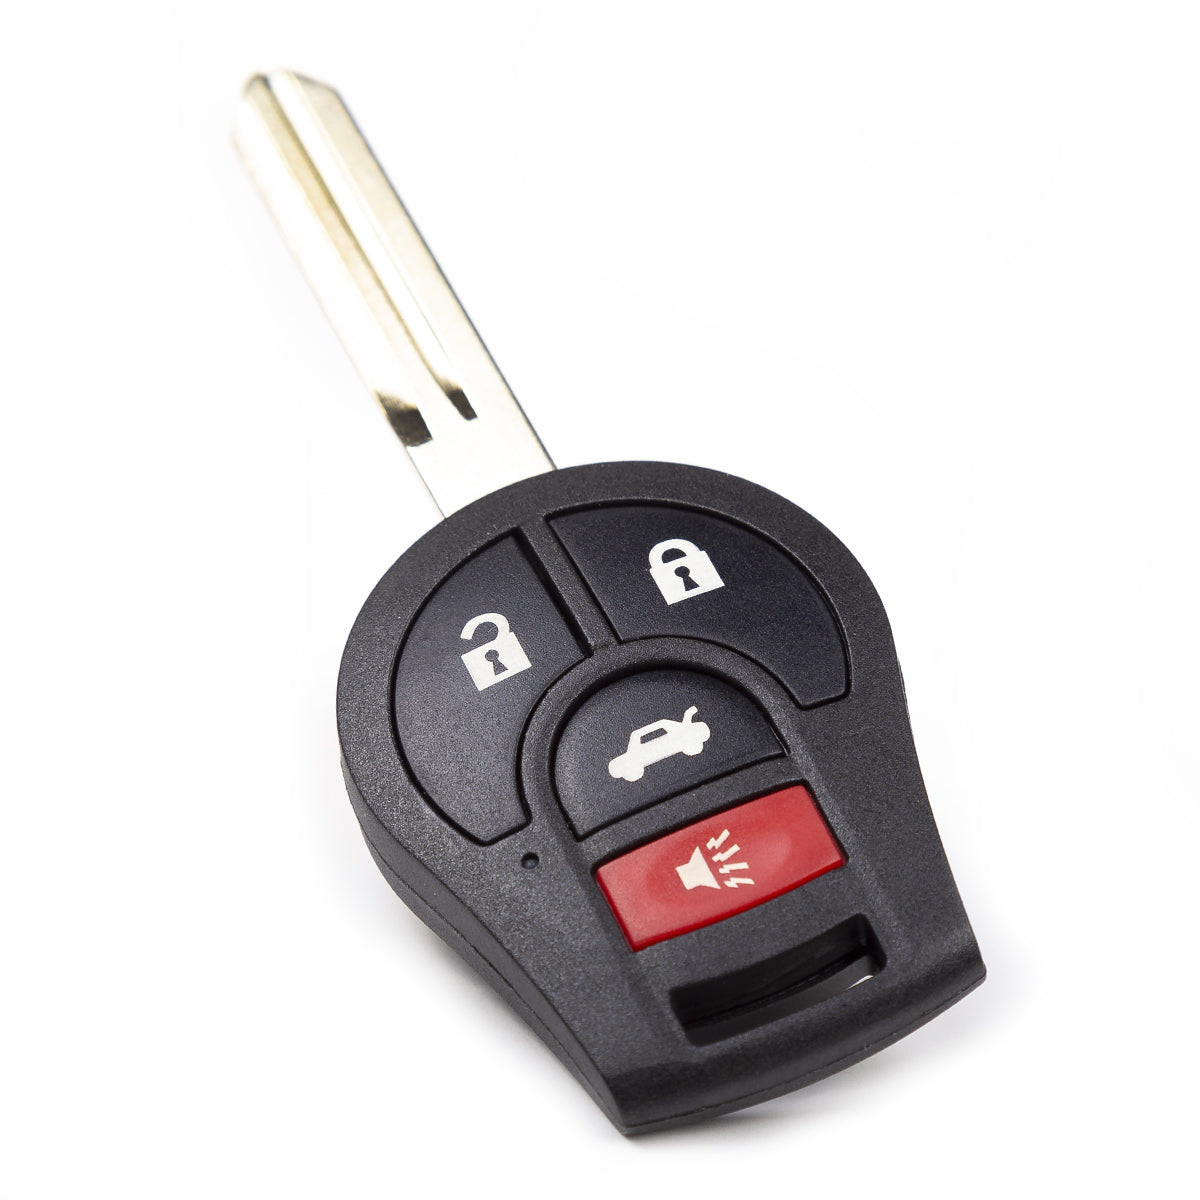 2007 Nissan Murano Key Fob - Aftermarket - 4 Buttons Fob FCC# CWTWB1U751 - ID46 Chip